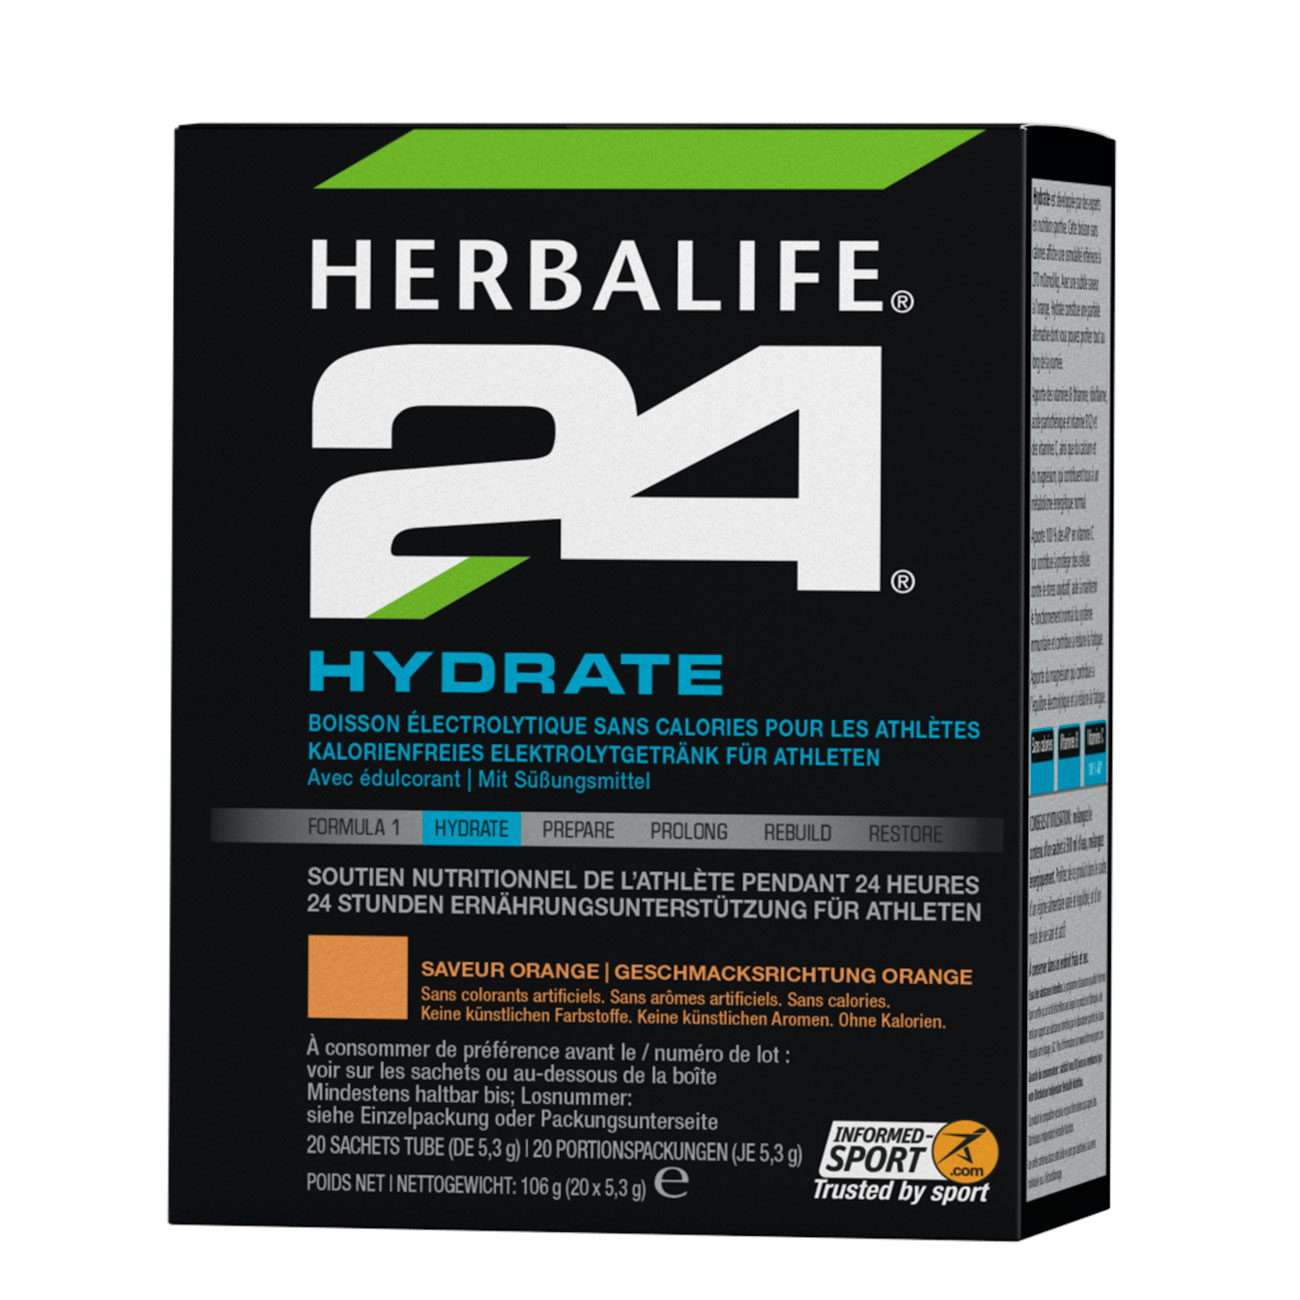 Herbalife24® Hydrate Boissons a base d'electrolytes Orange 20 sachets, 106g